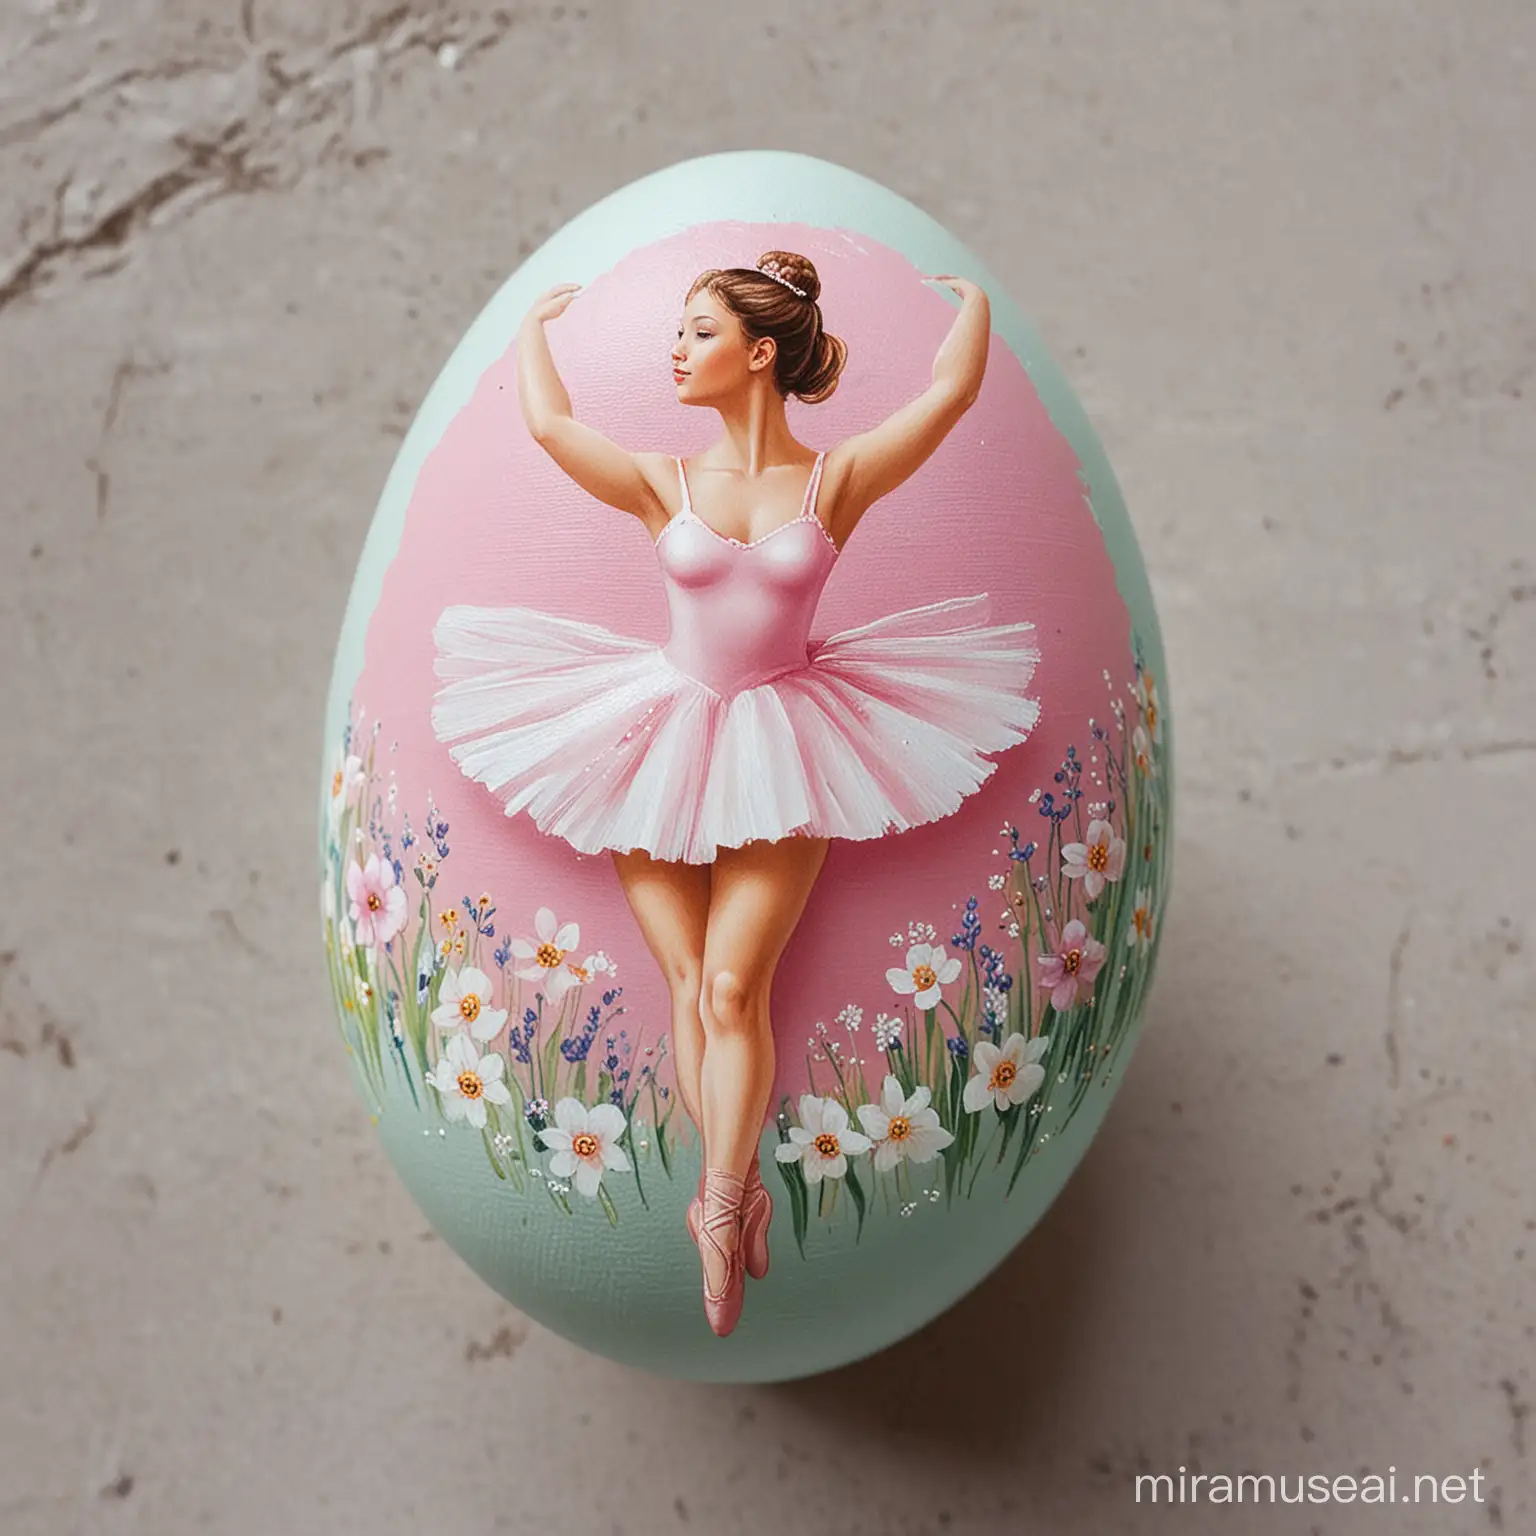 ballerina painted on an Easter egg
